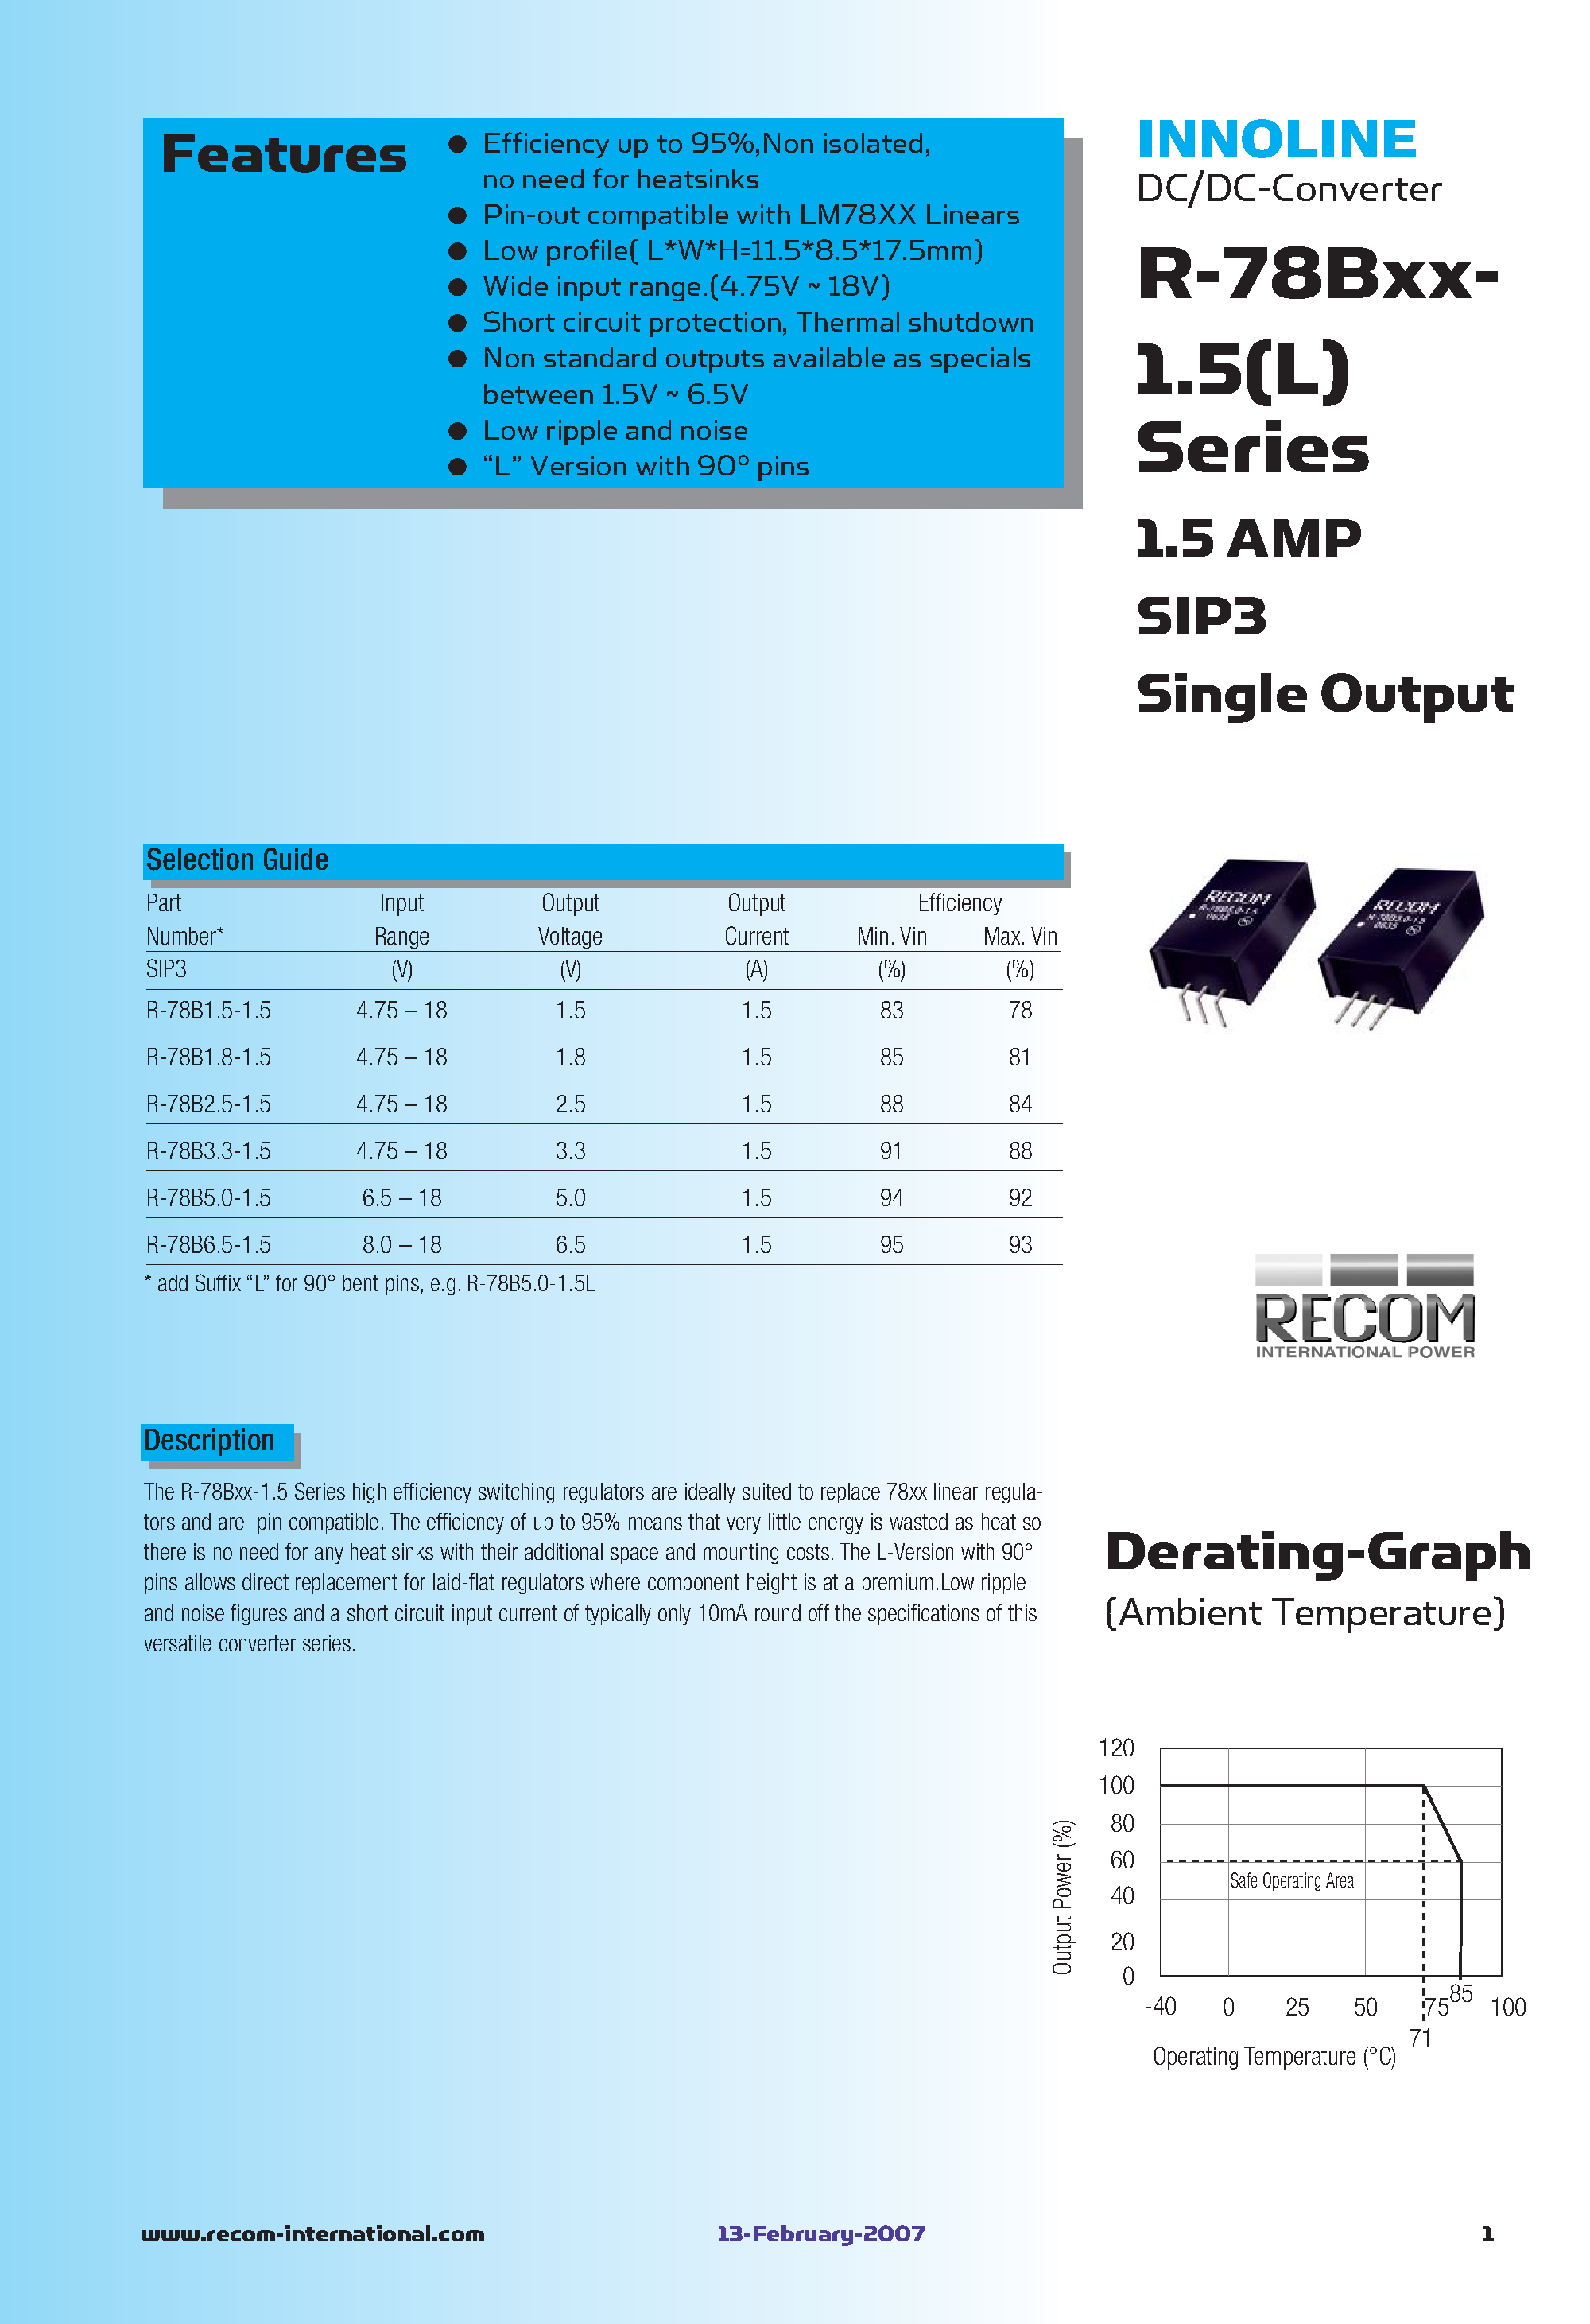 Даташит R-78Bxx-1.5-SIP3 Single Output страница 1